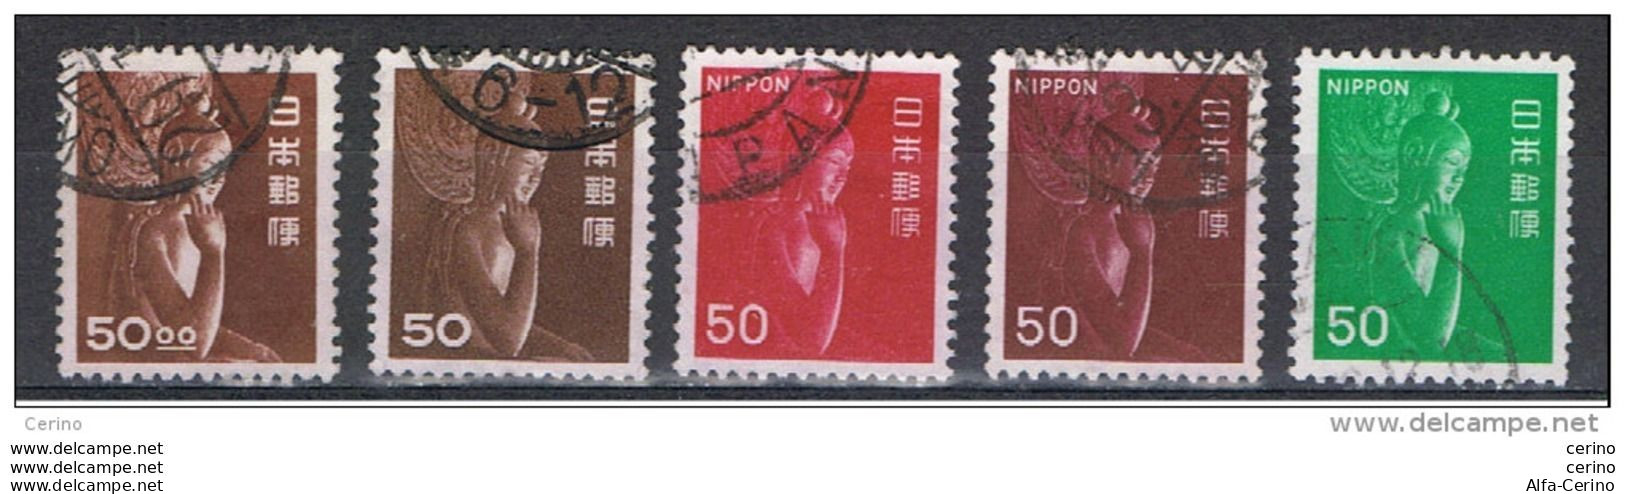 JAPAN:  1951/76  KWANNON  -  KOMPLET  SET  5  USED  STAMPS  -  YV/TELL. 469//1177 - Gebruikt